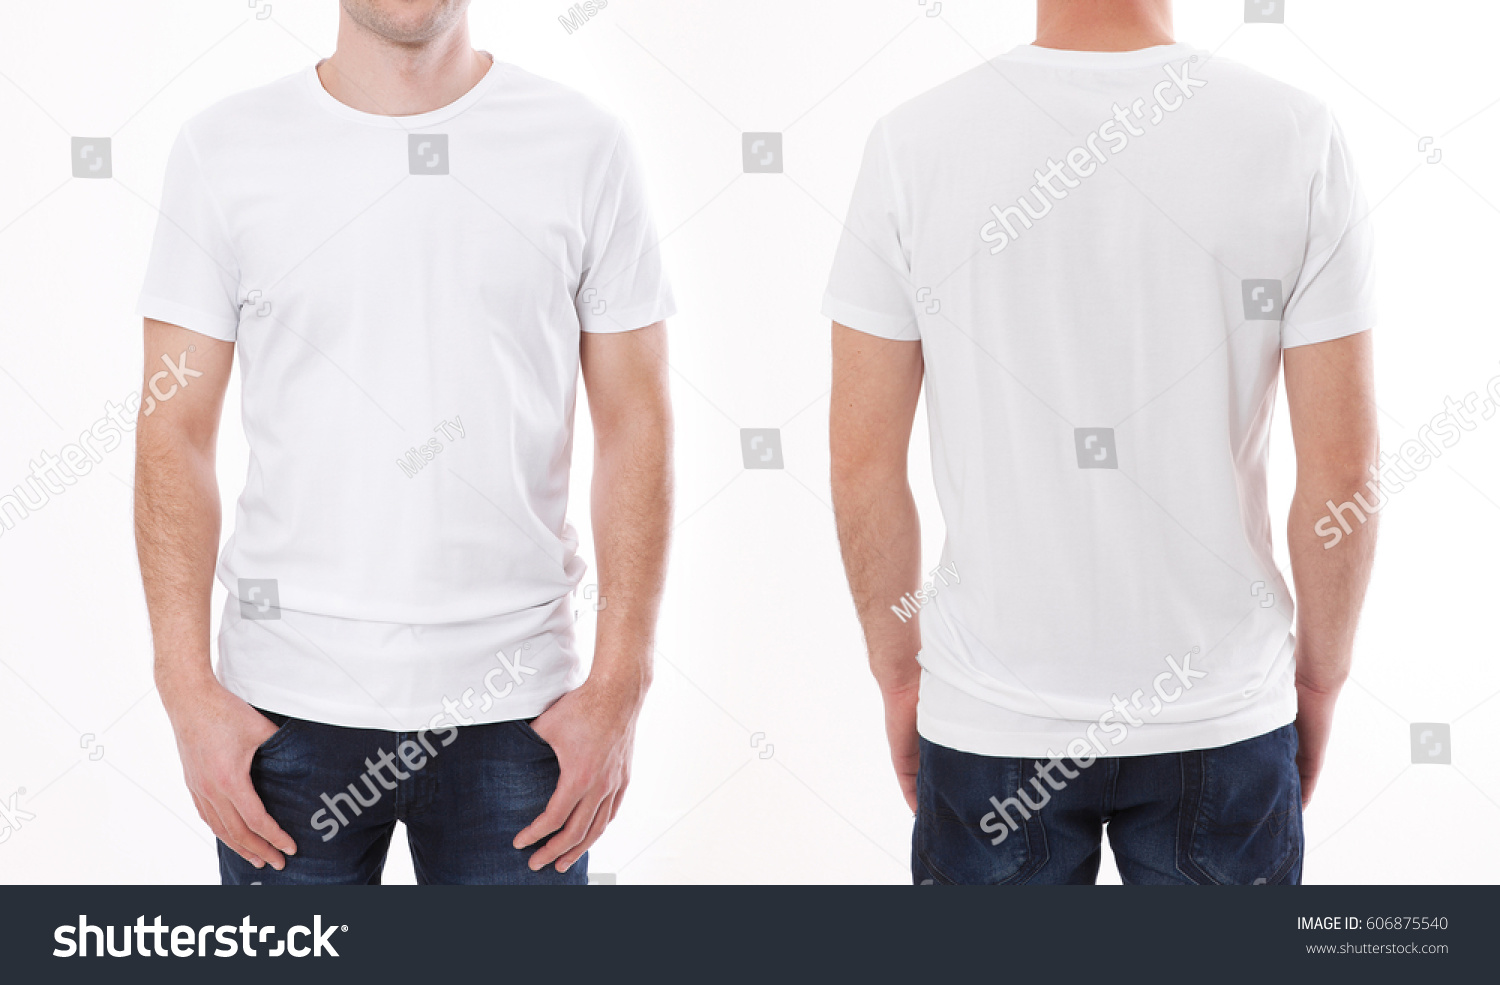 142,441 White tshirt Images, Stock Photos & Vectors | Shutterstock